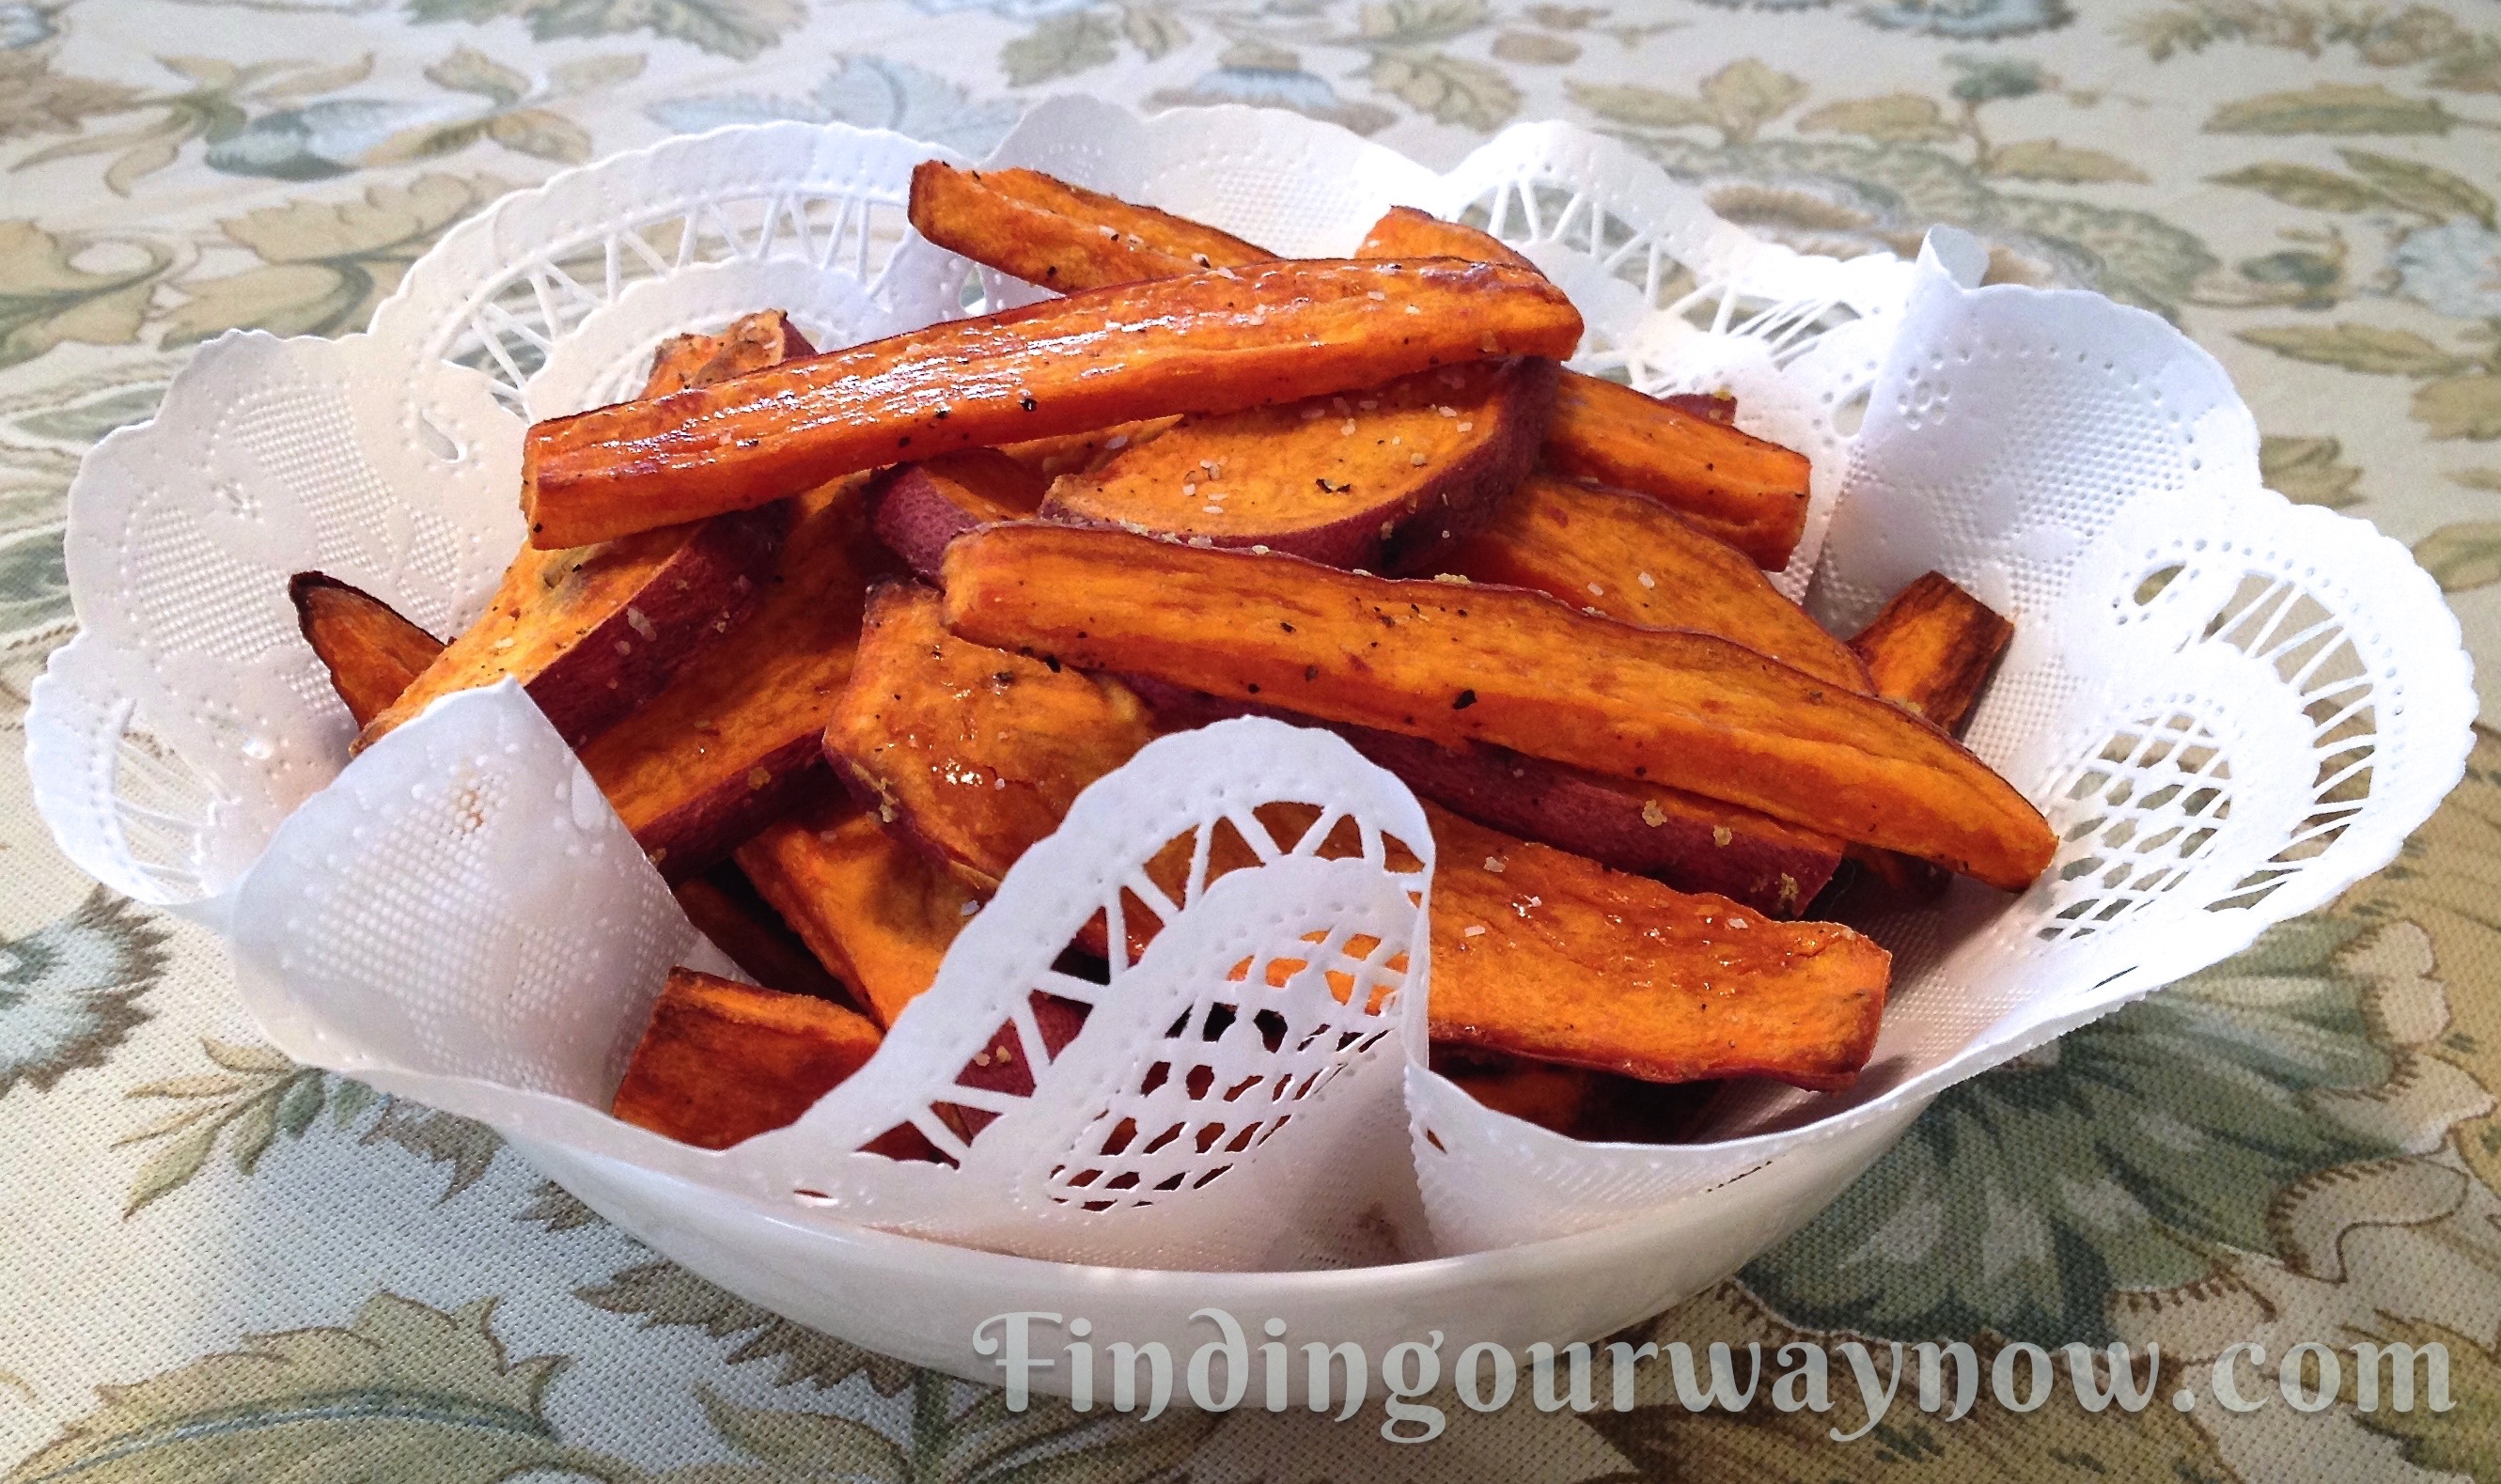 Oven Sweet Potato Fries, findingourwaynow.com